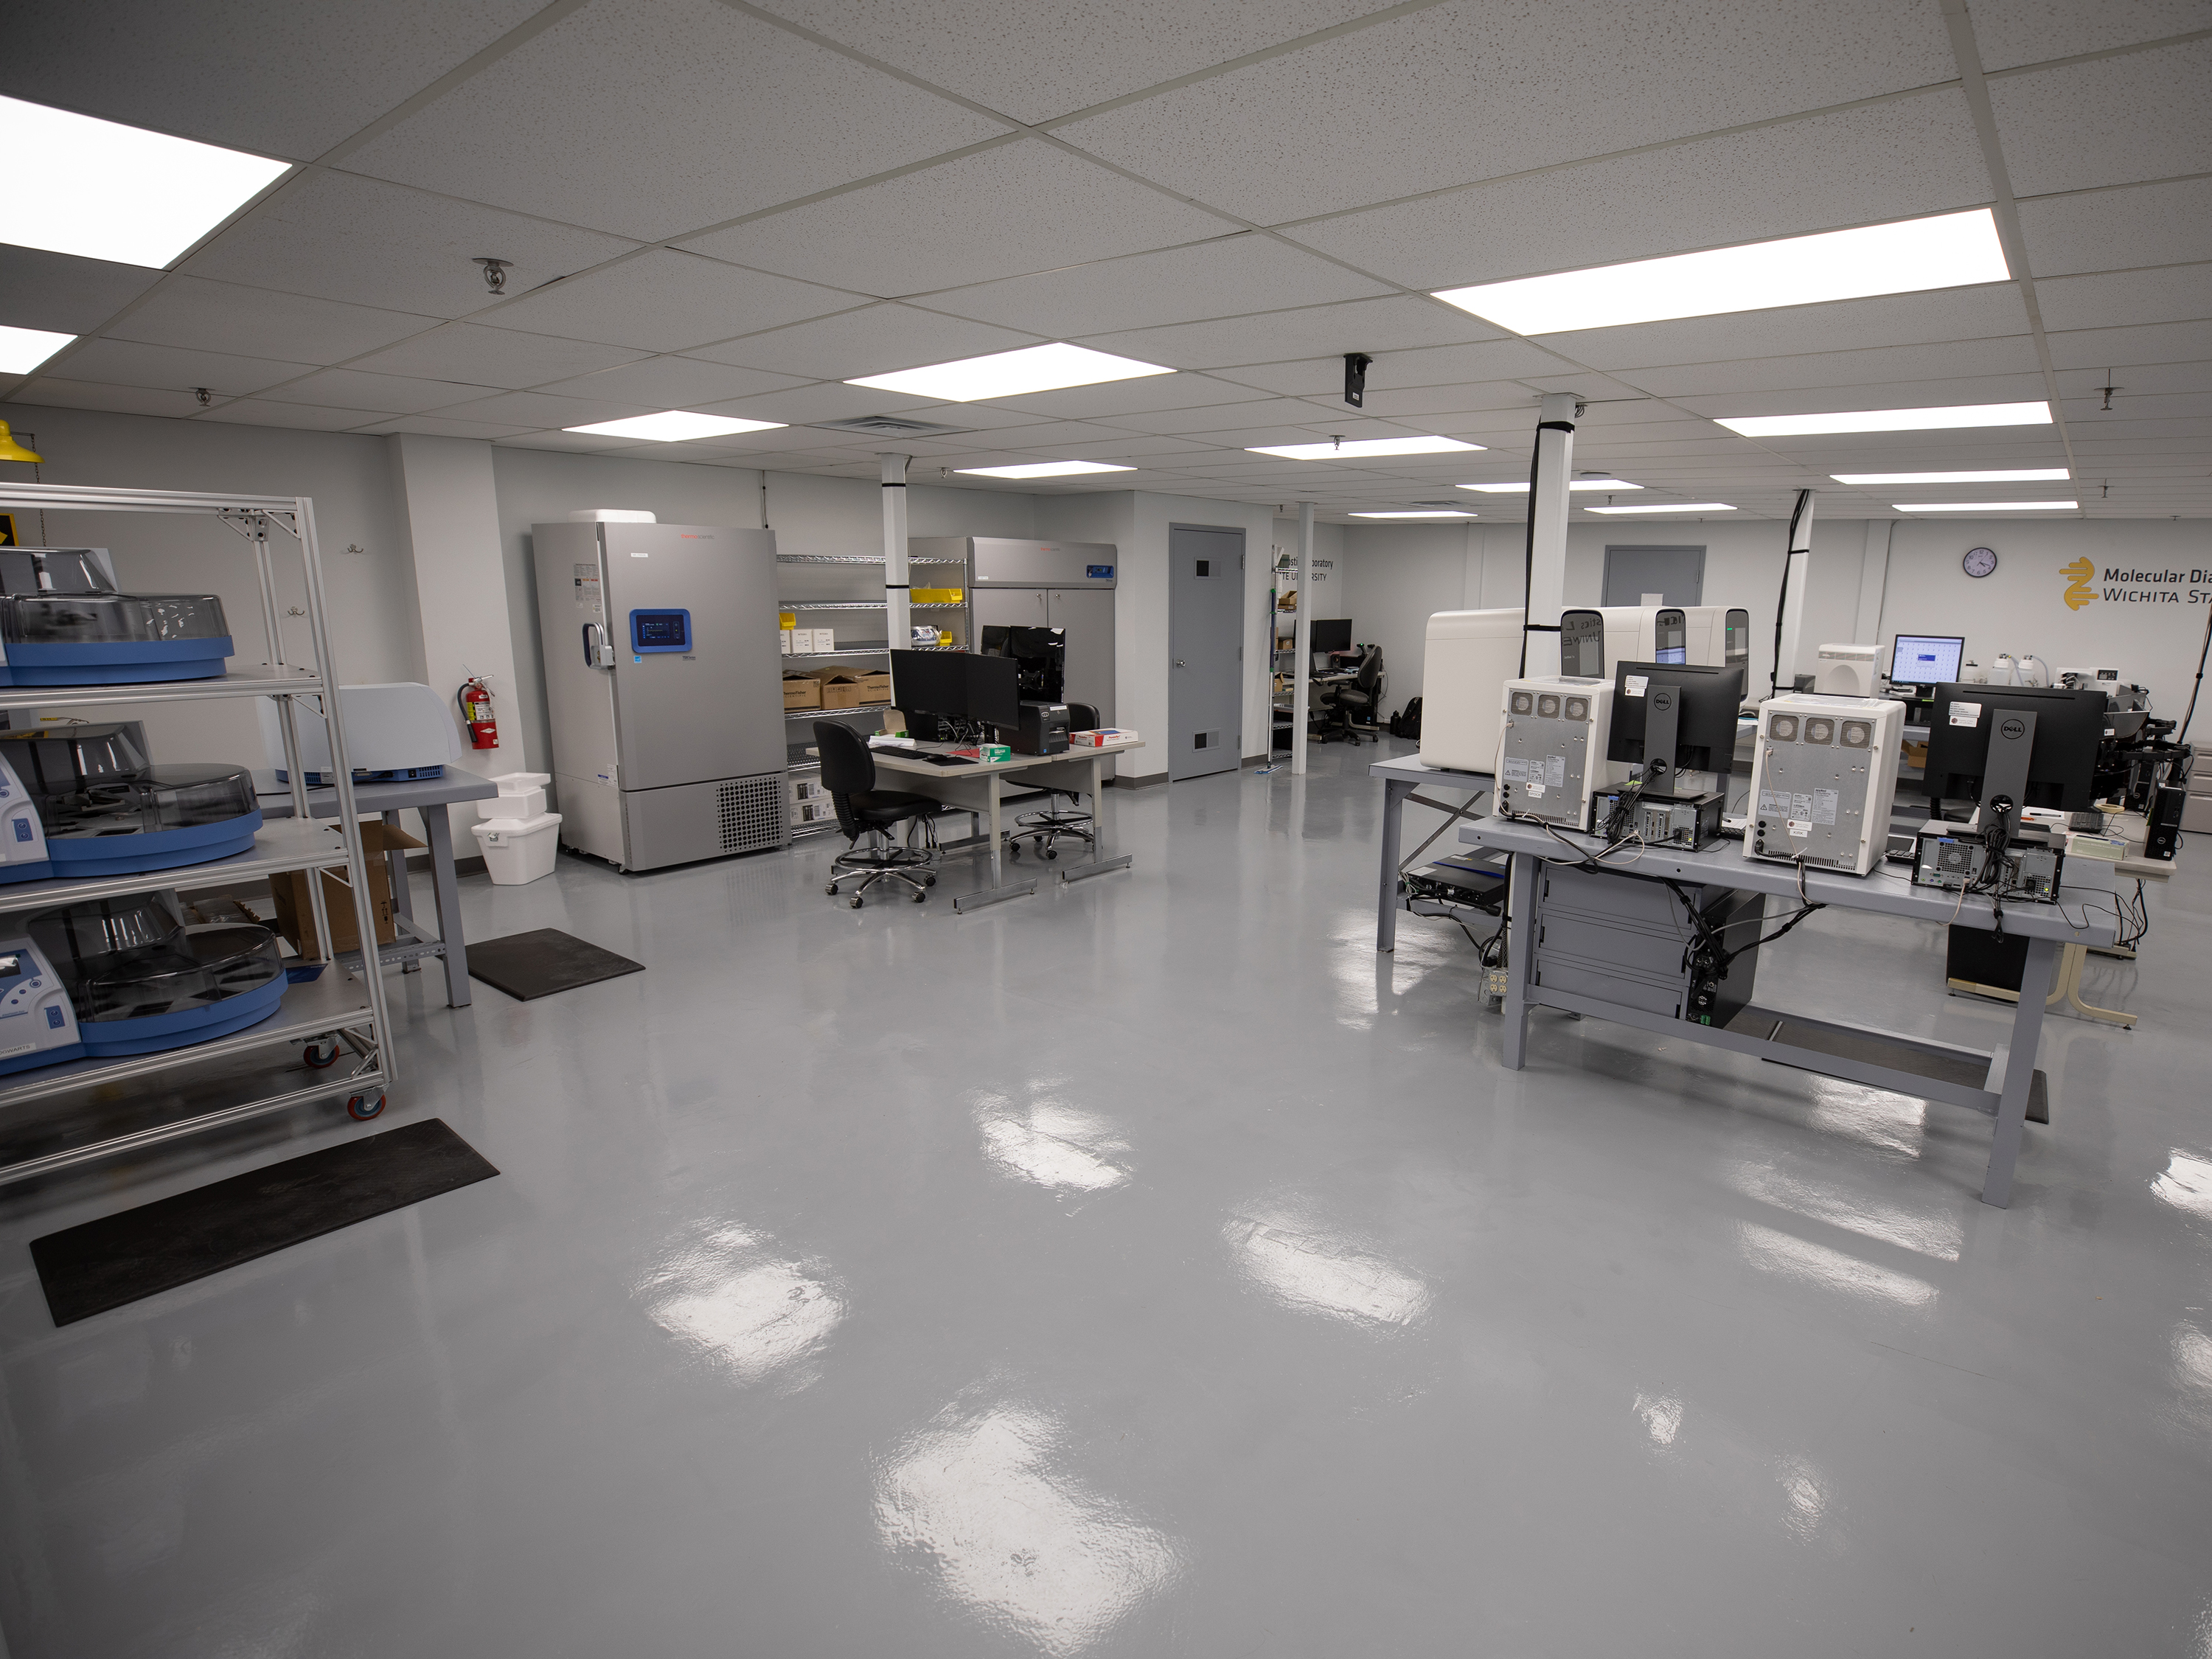 Molecular Diagnostics Lab at Wichita State